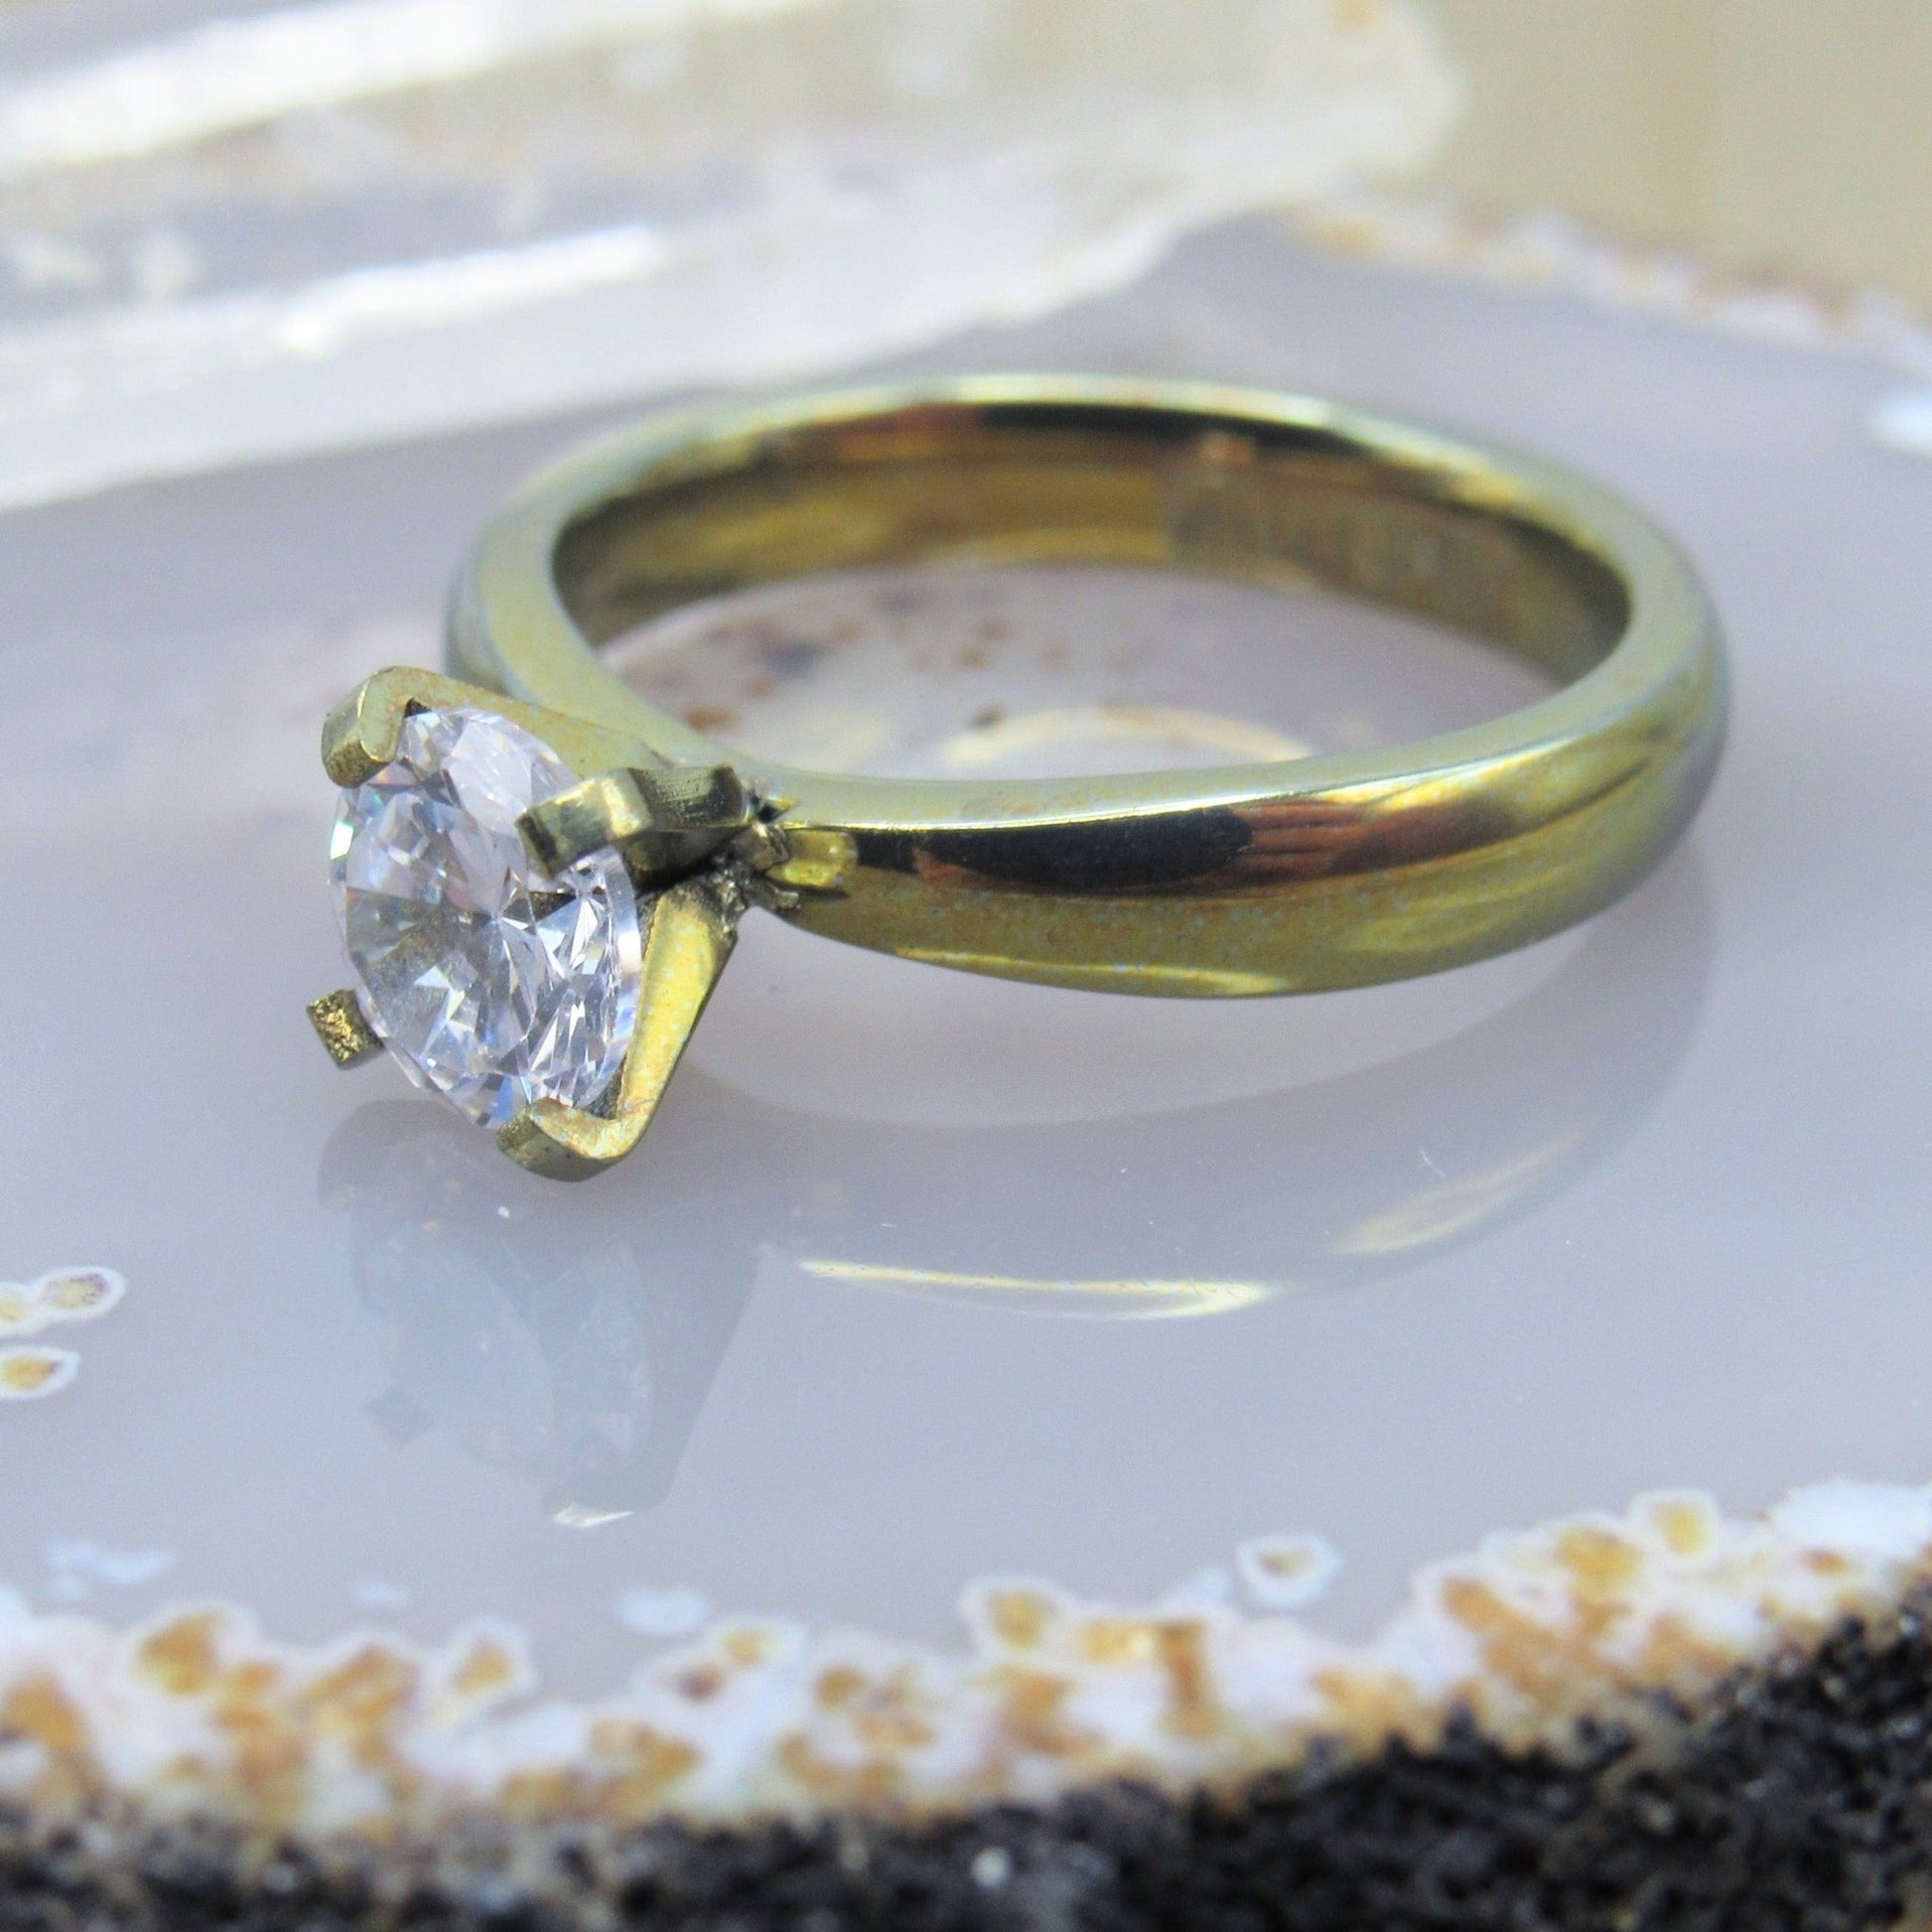 Titanium engagement ring round cubic zirconia prong set 6mm gemstone yellow gold anodized - Siren Body Jewelry